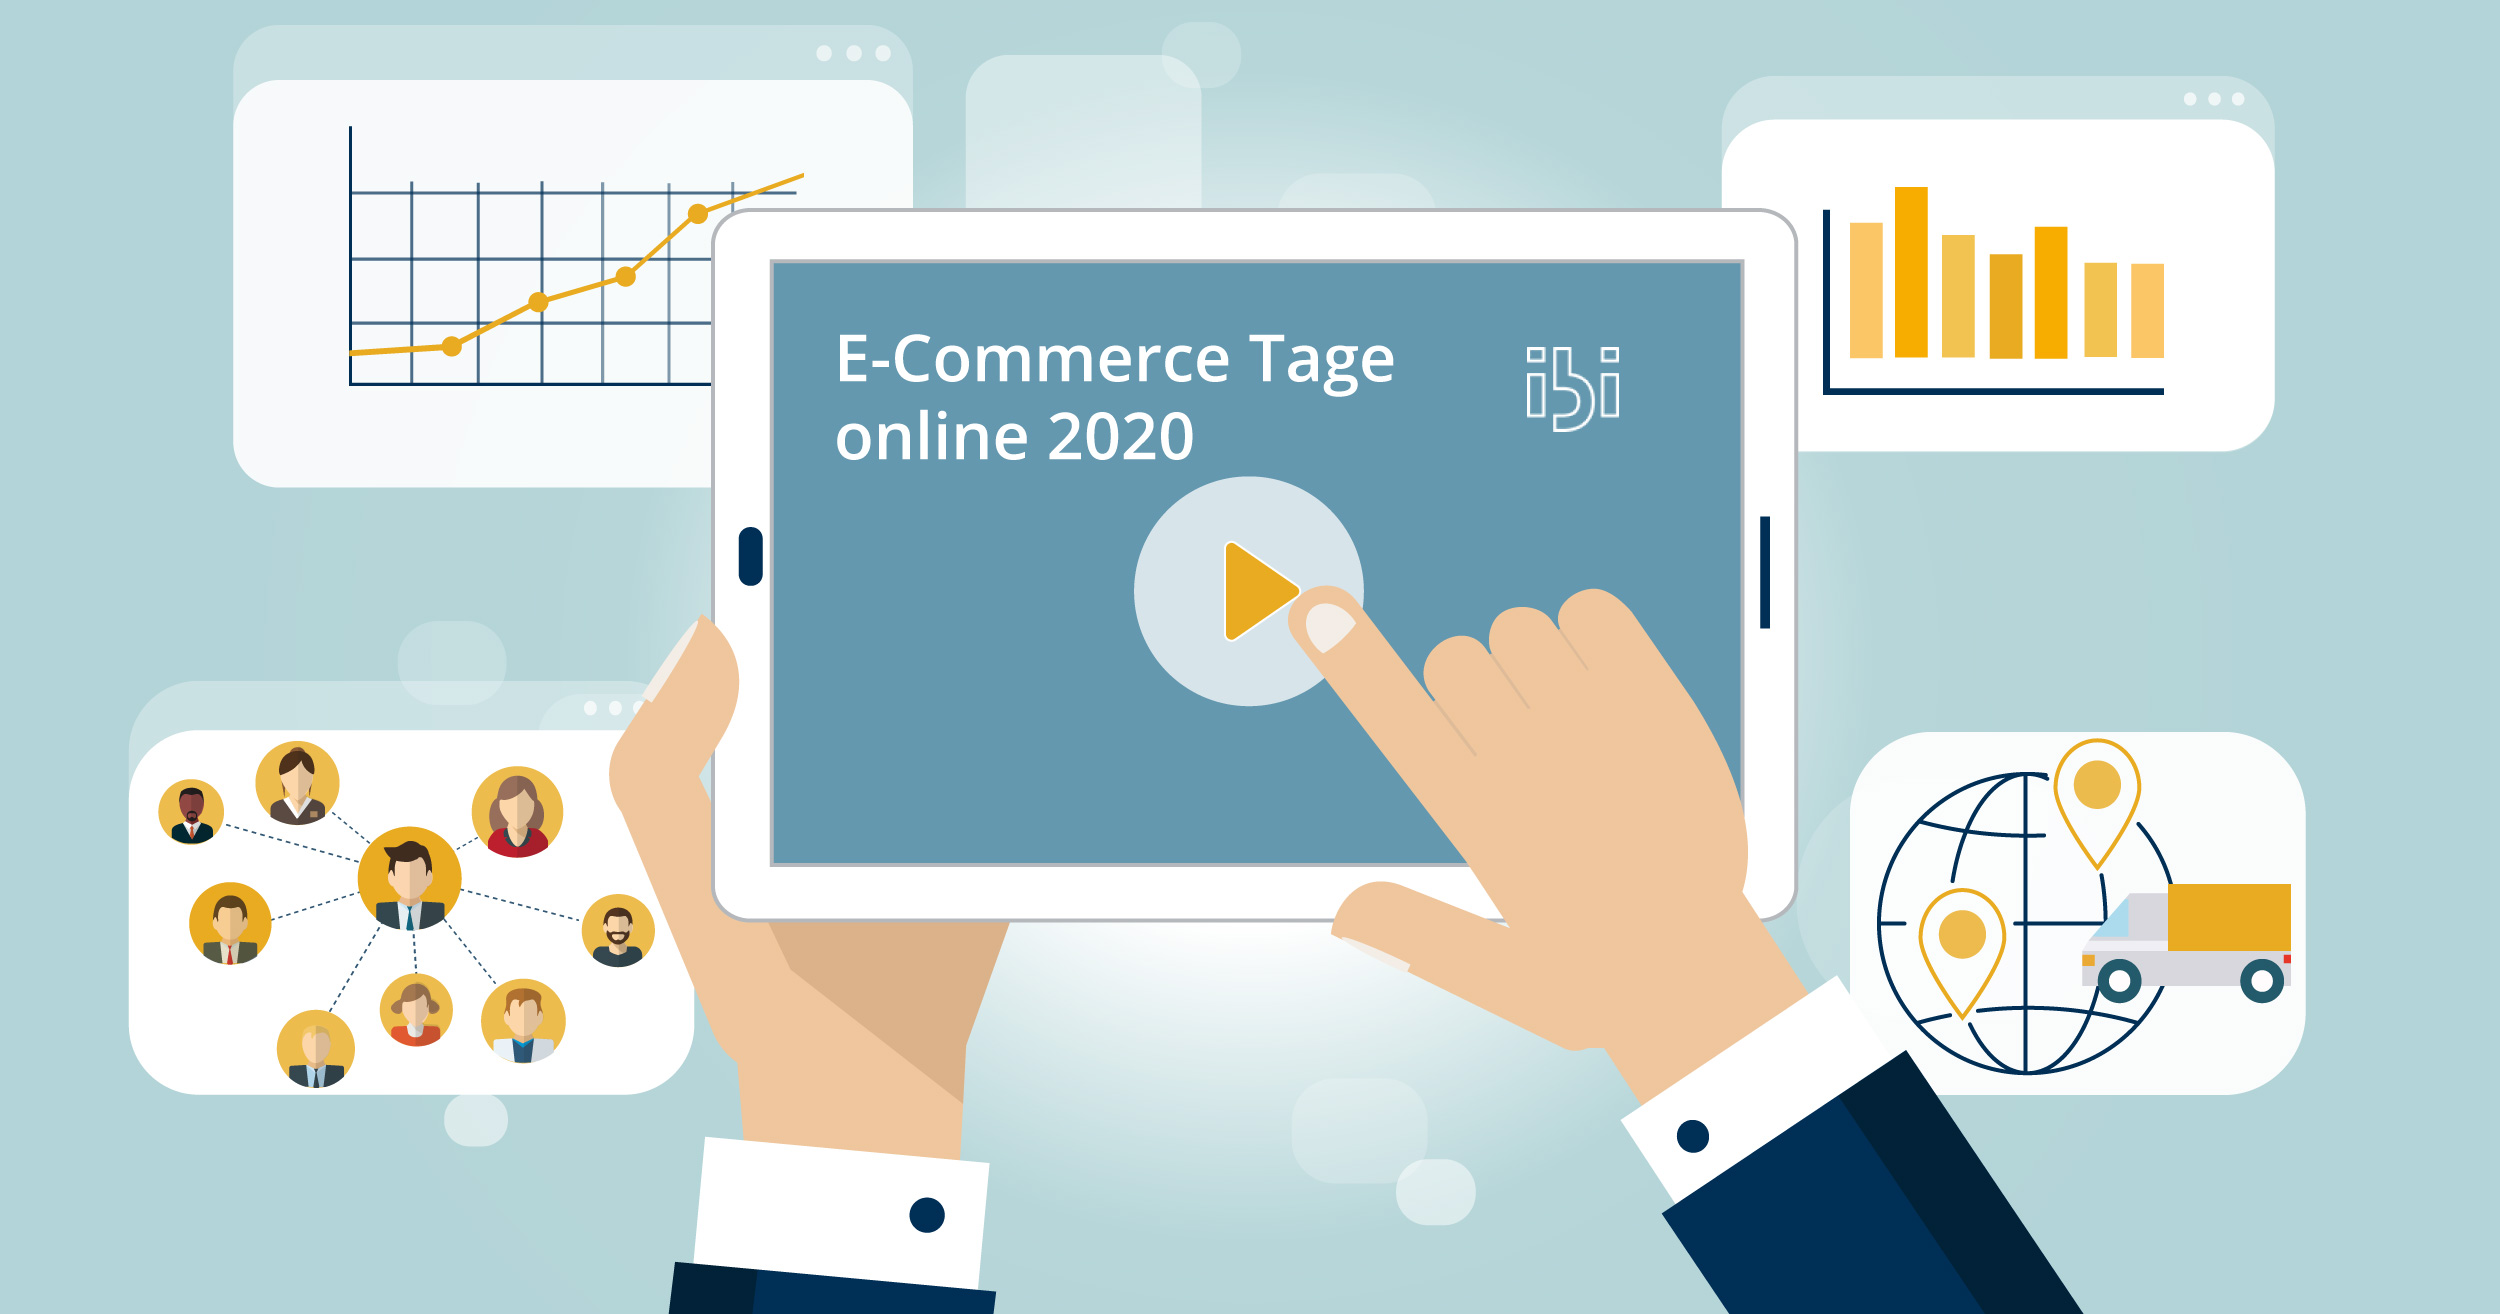 E-Commerce Tage online 2020